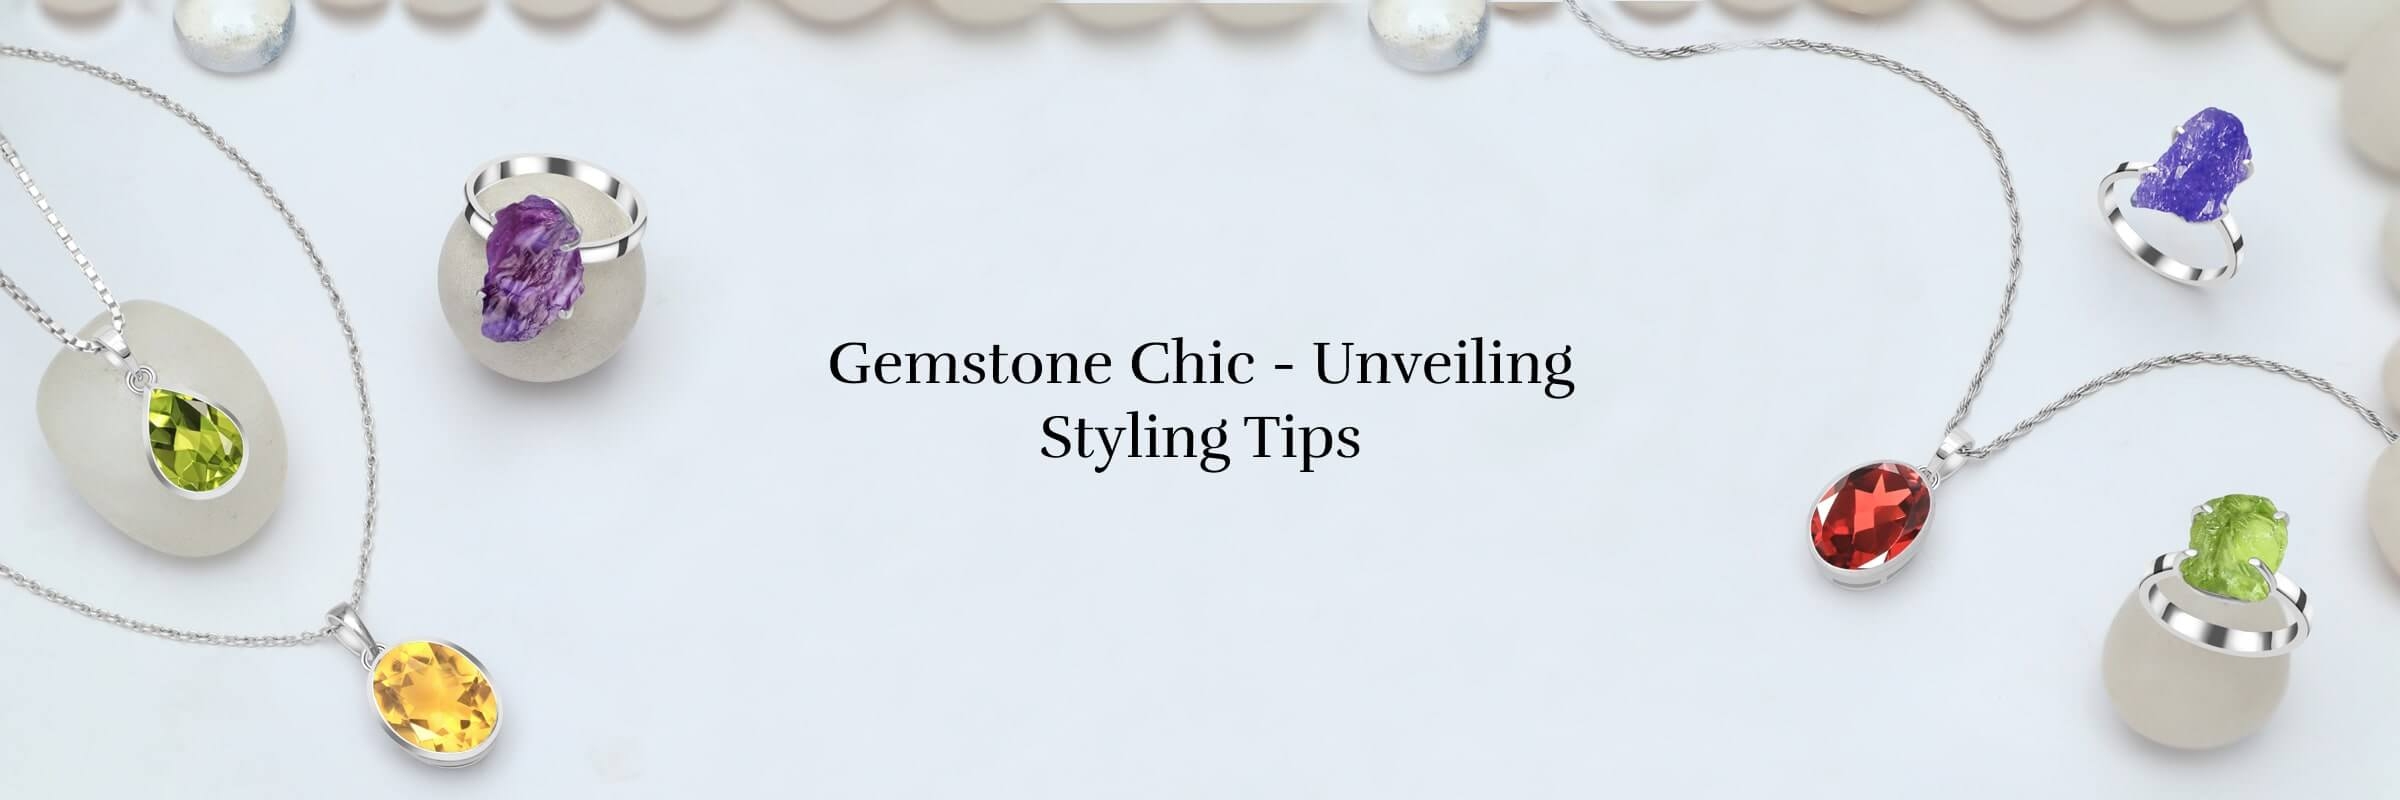 Gemstone jewelry styling tips